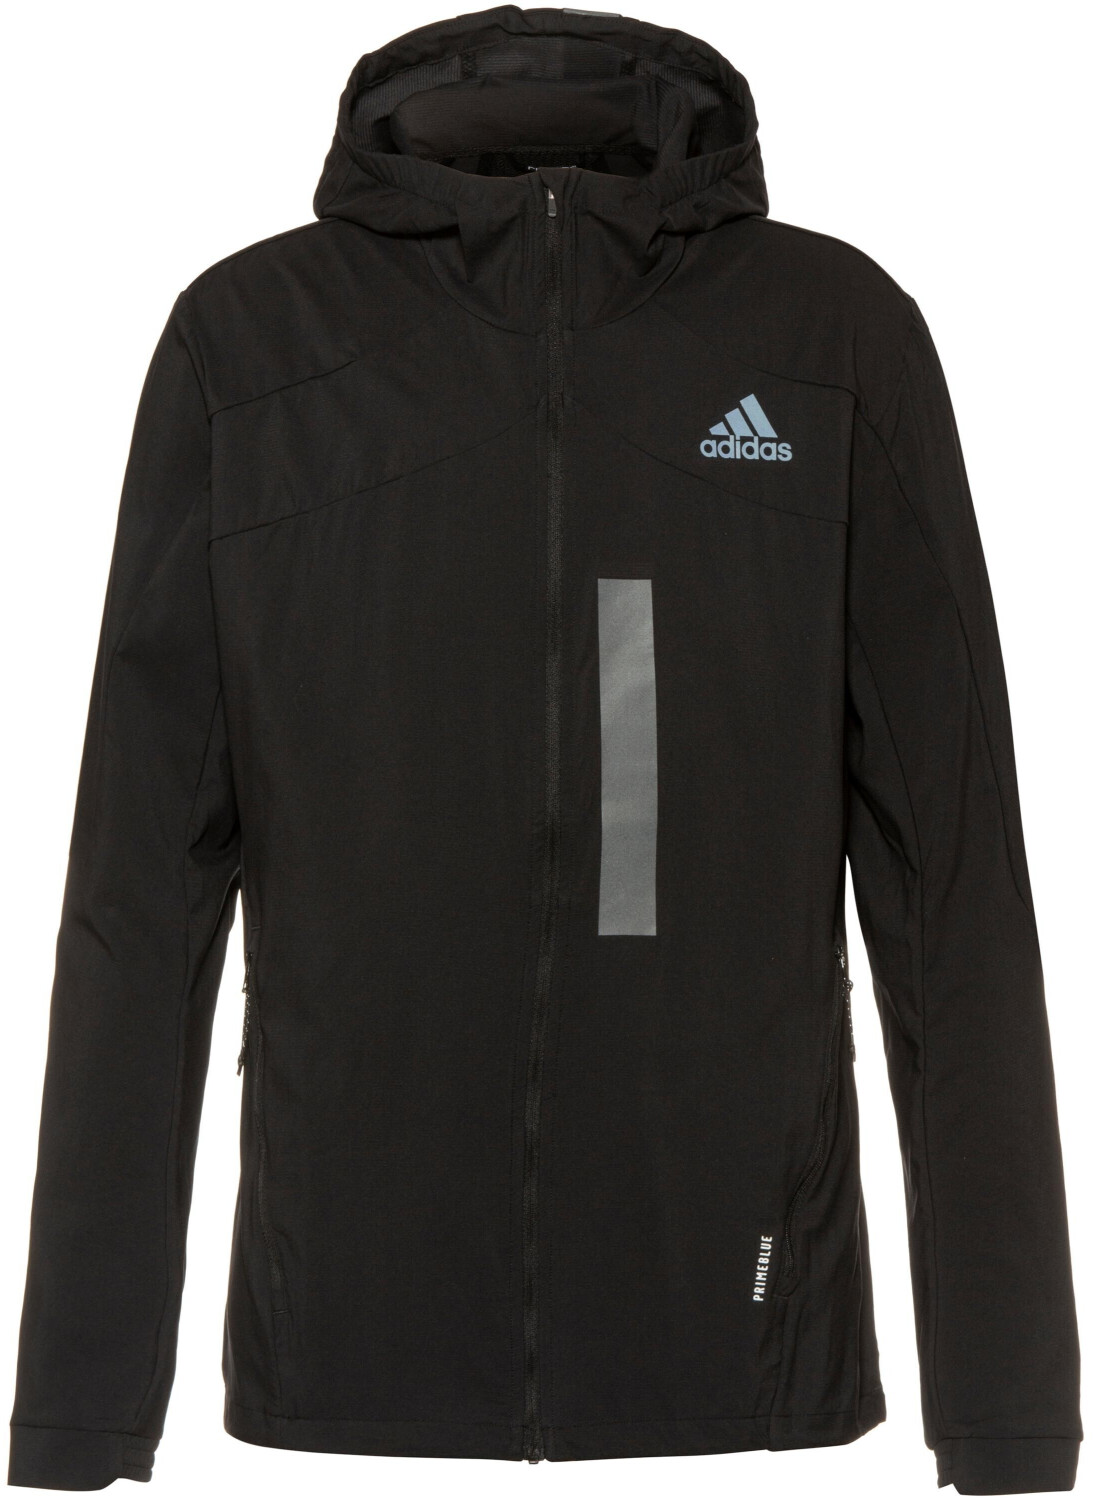 Buy Adidas Marathon Translucent Running Jacket (GM4949) black from £62.